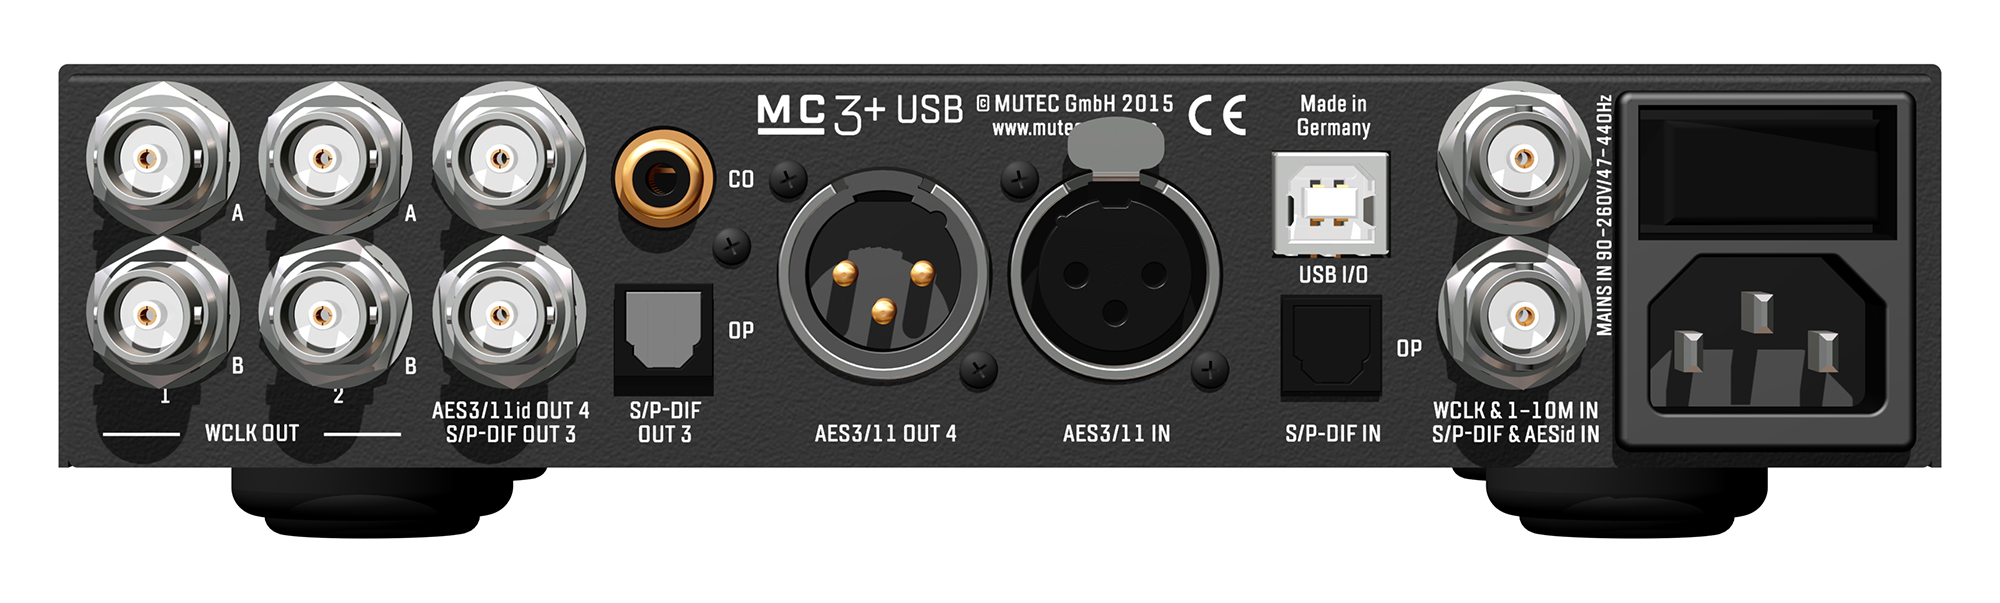 MUTEC - MC-3+USB/Aluminum  美品！